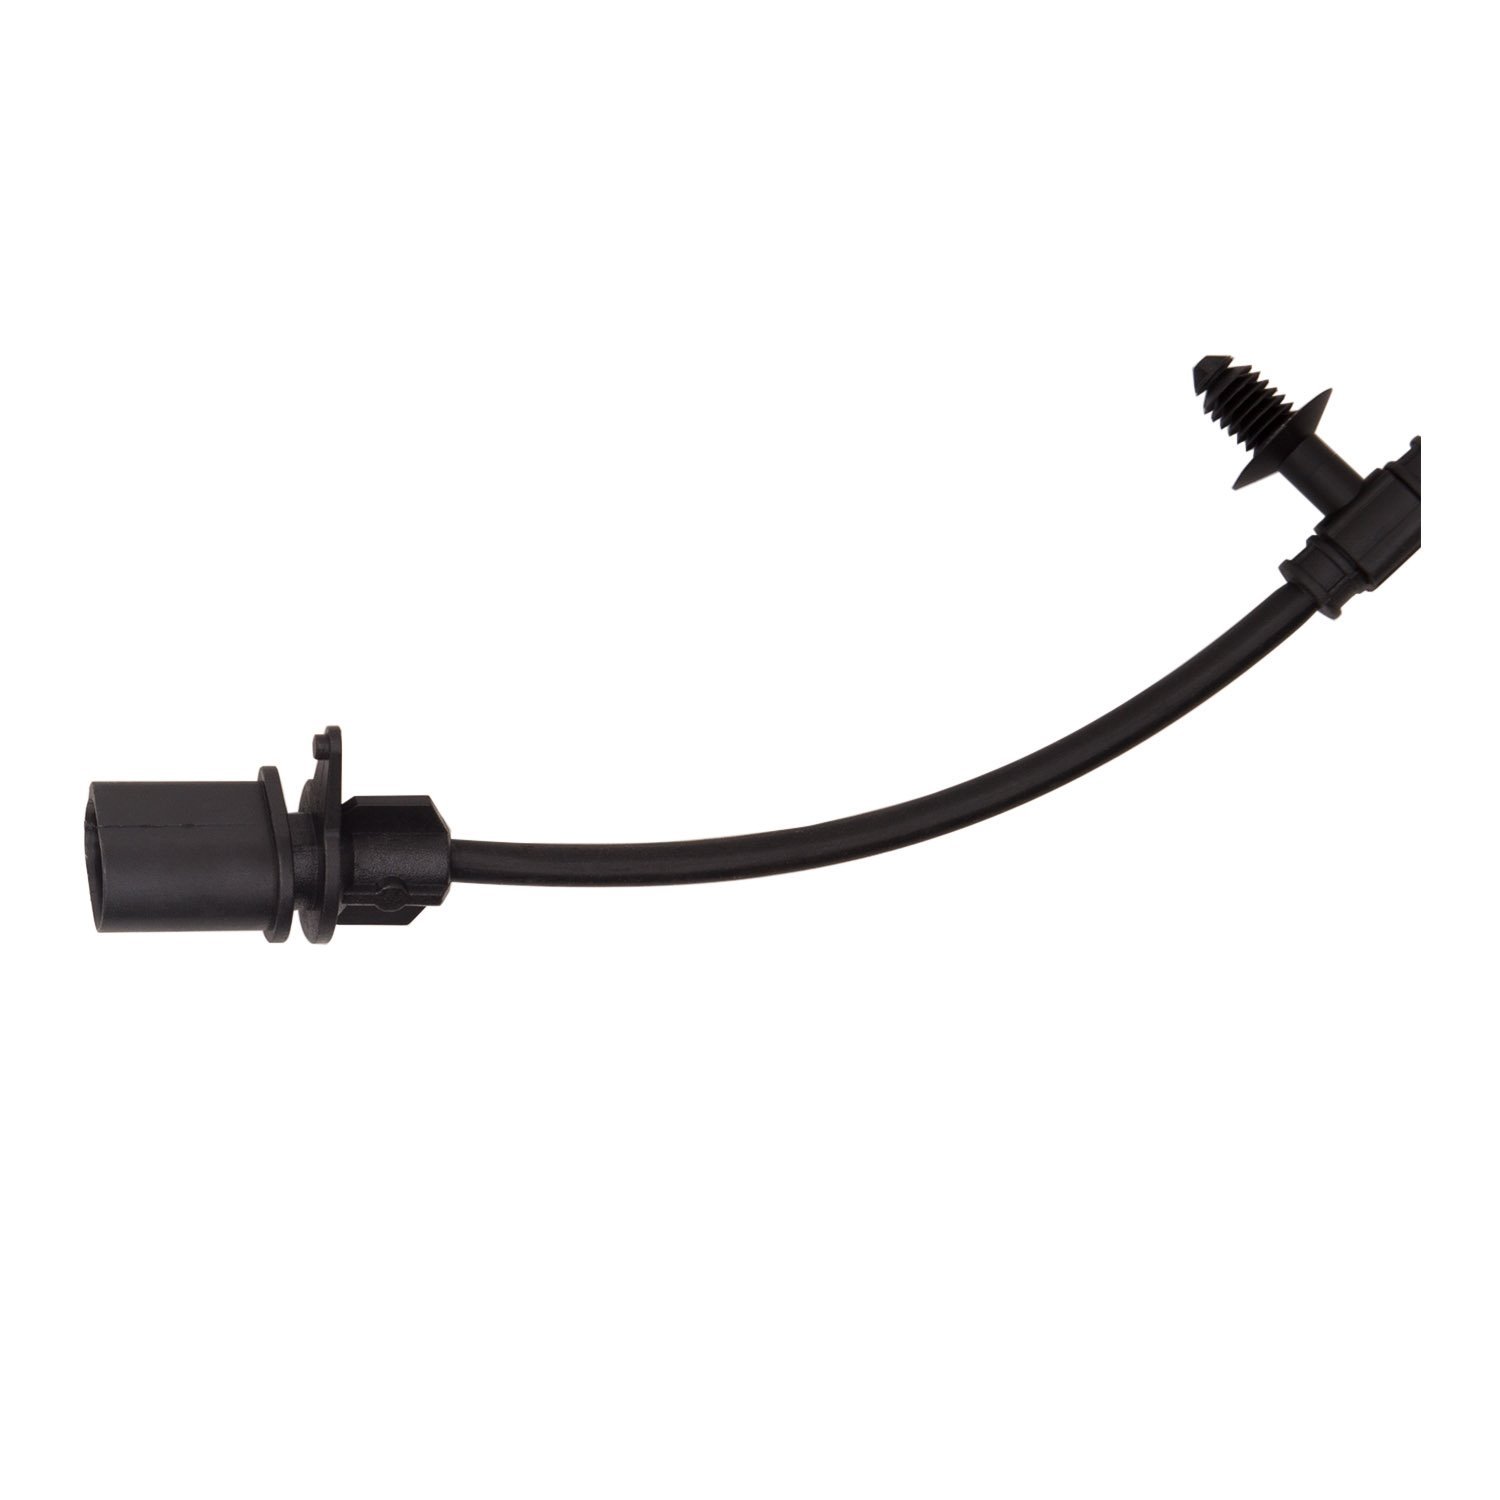 341-74004 Sensor Wire, Fits Select Audi/Volkswagen, Position: Rear